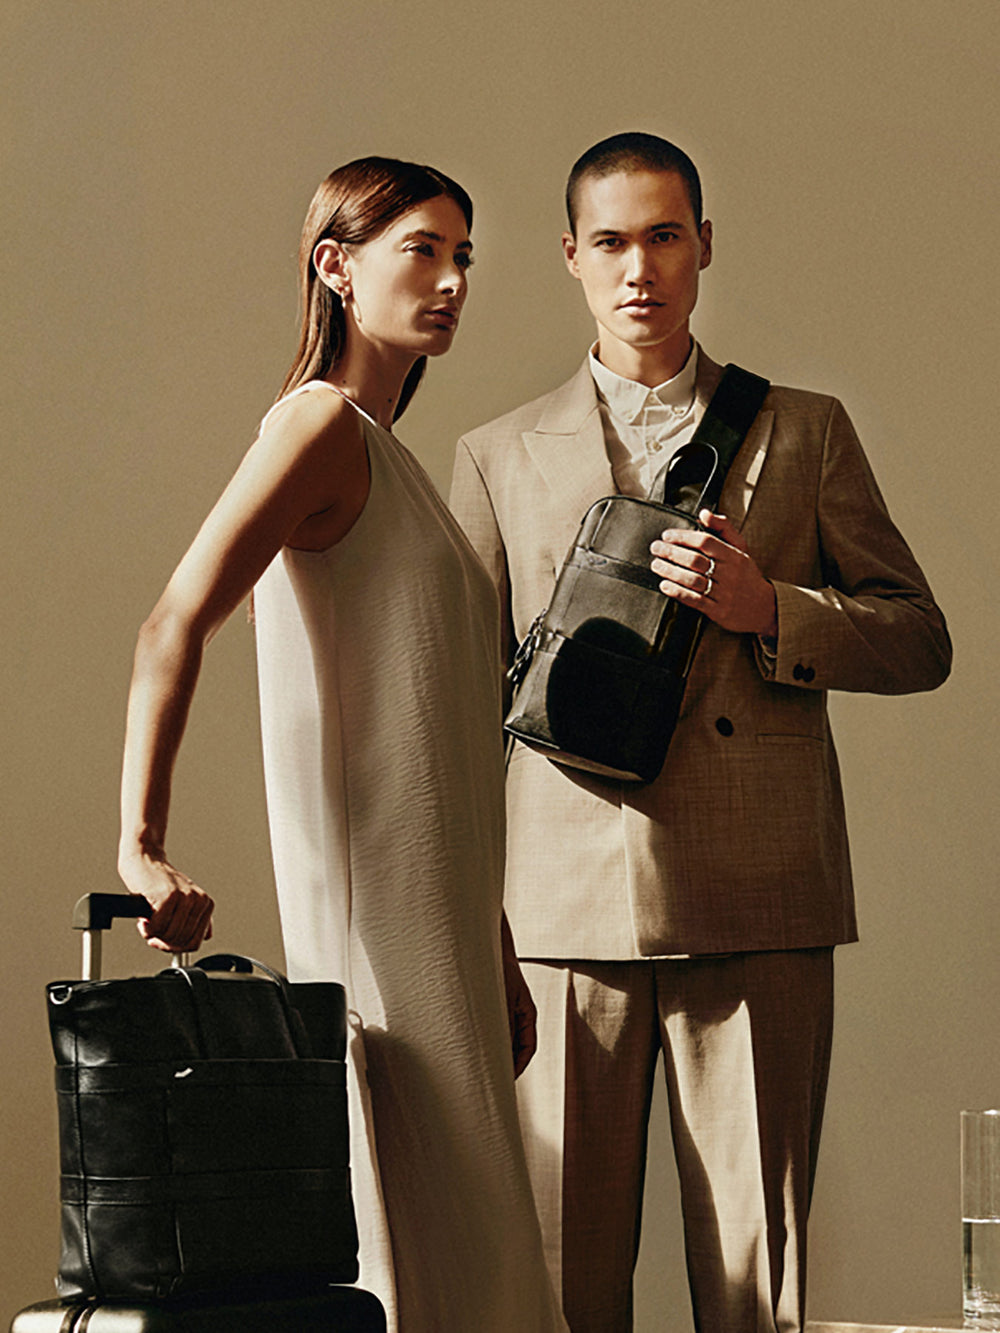 vocier vantage tote bag and sling bag on traveller suitcase woman and man